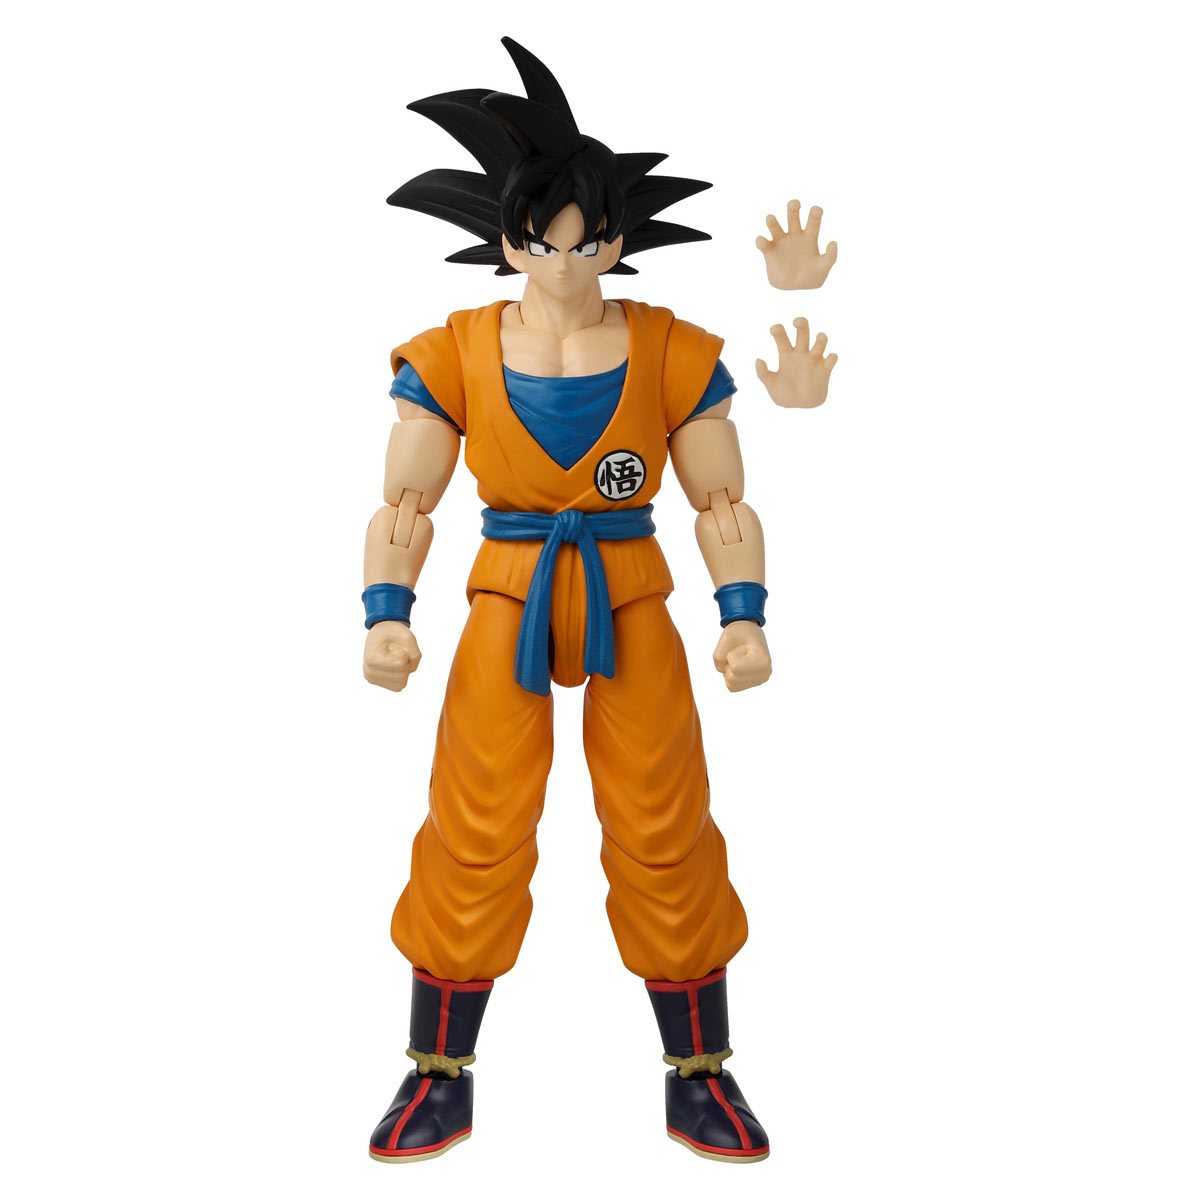 Kit 2 Boneco Dragon Ball Z Super Goku Super Sayajin Blue + ssj em